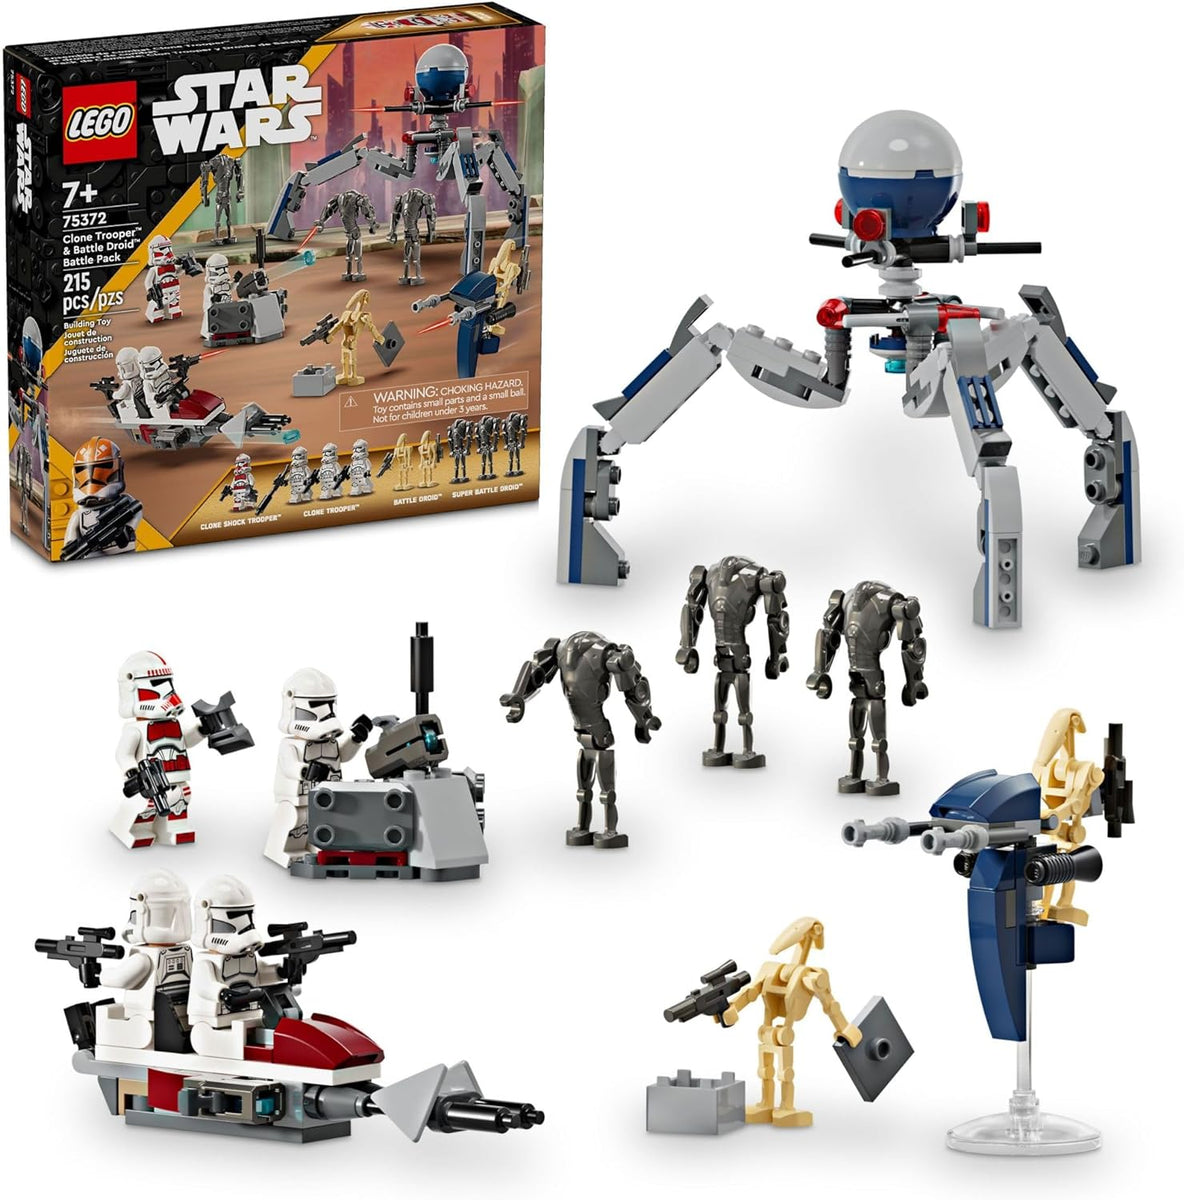 MOC] LEGO Star Wars AT-RT Walker and Speeder - Alternate Build of 75372  Clone Trooper & Droid Battle Pack - LEGO Star Wars - Eurobricks Forums